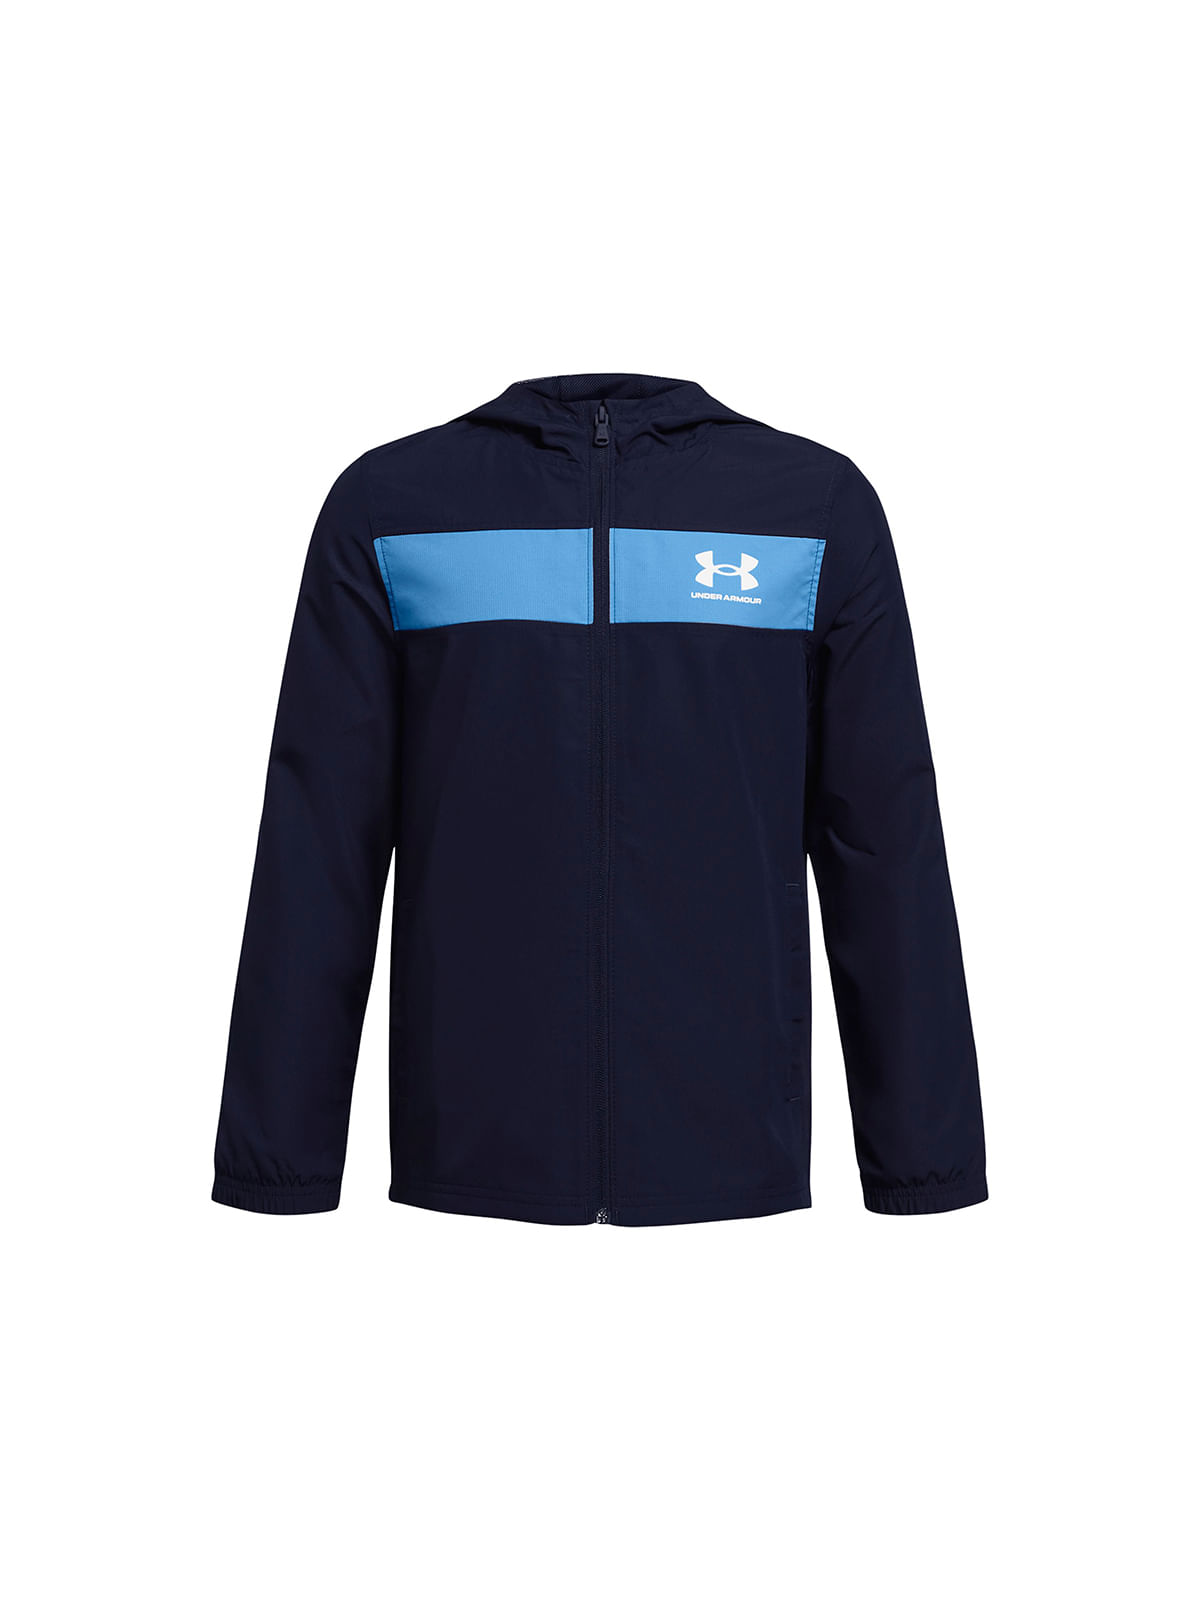 Under Armour Men's UA Sportstyle Elite Jacket - 1376967